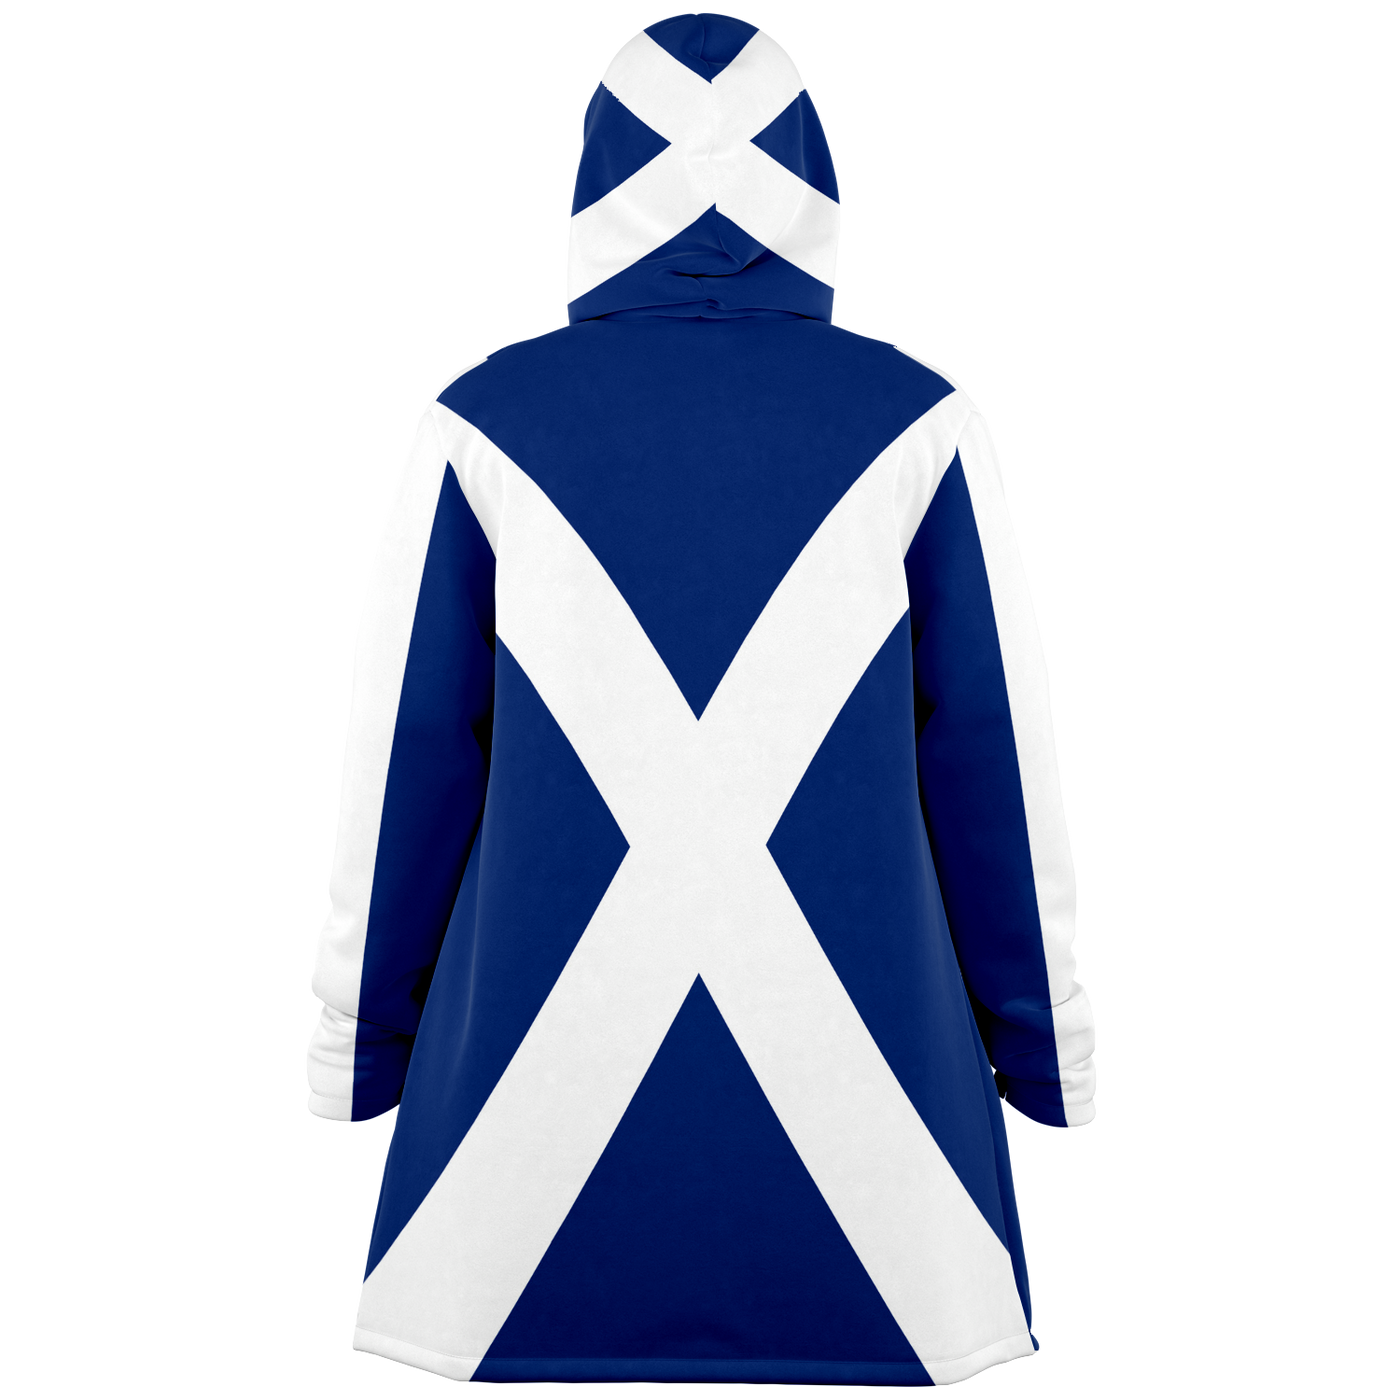 Capa de Microforro Polar con la Bandera de Escocia